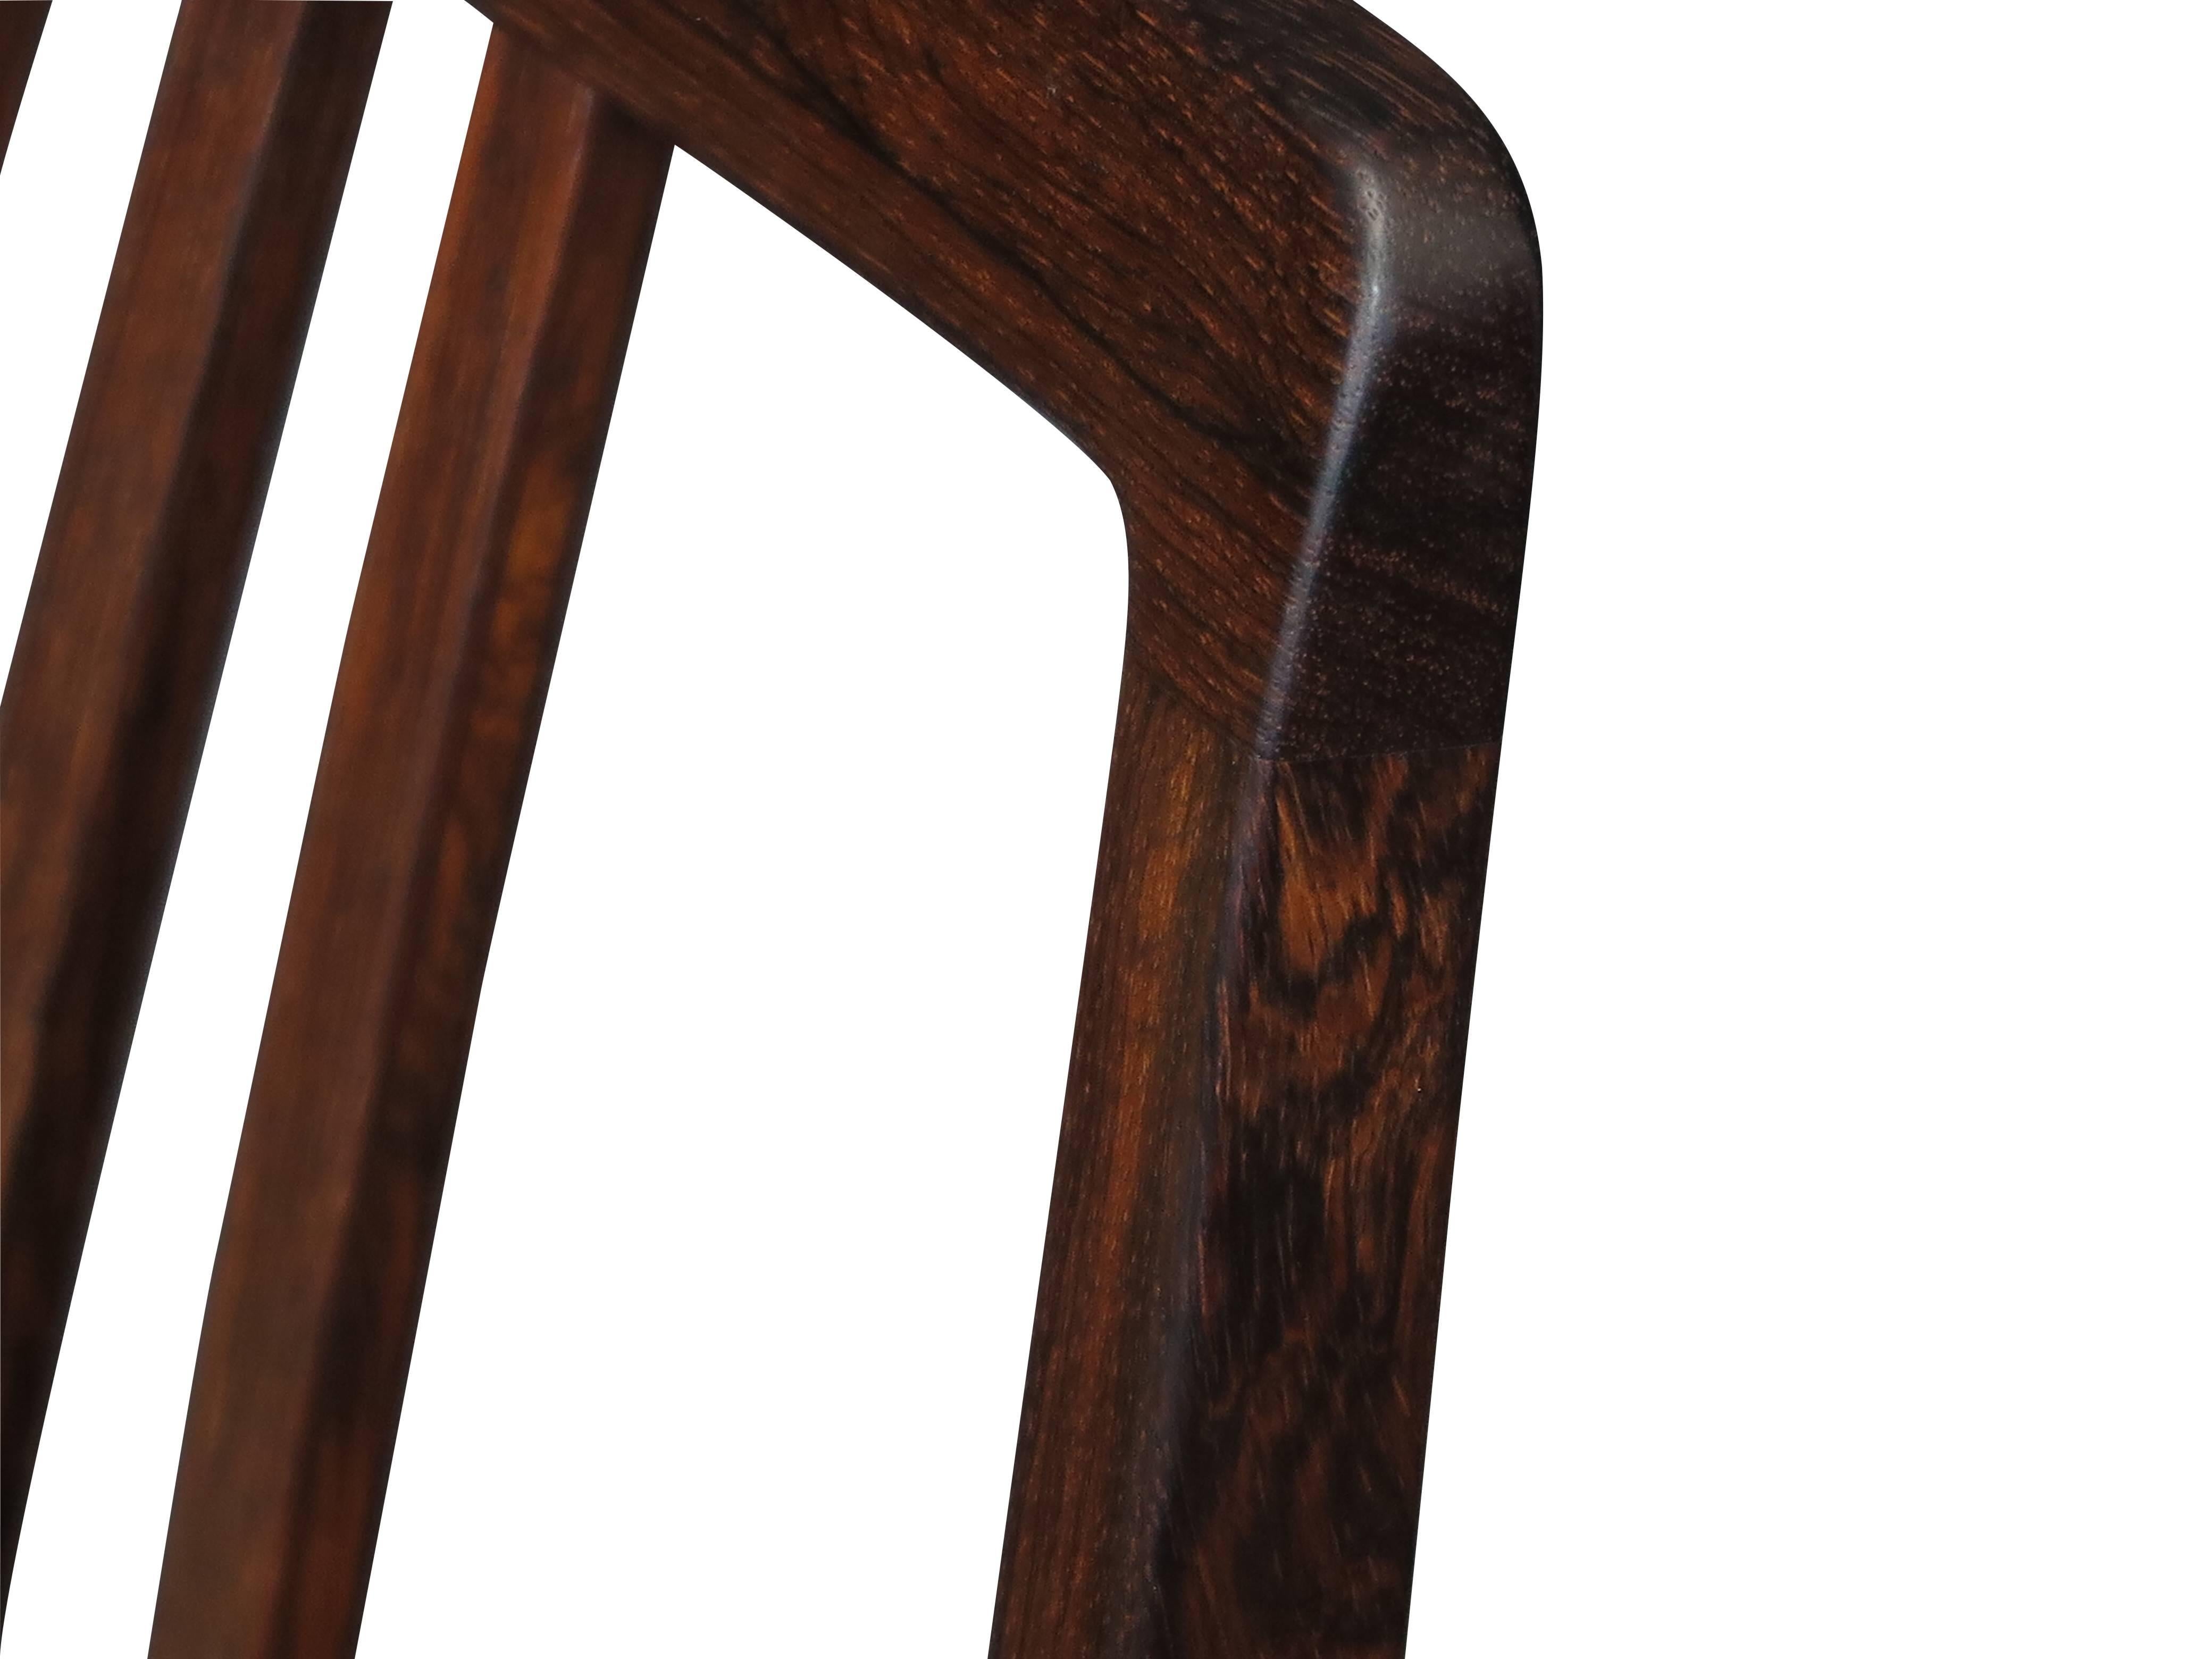  Kofod Larsen Danish Rosewood Dining Chairs  2